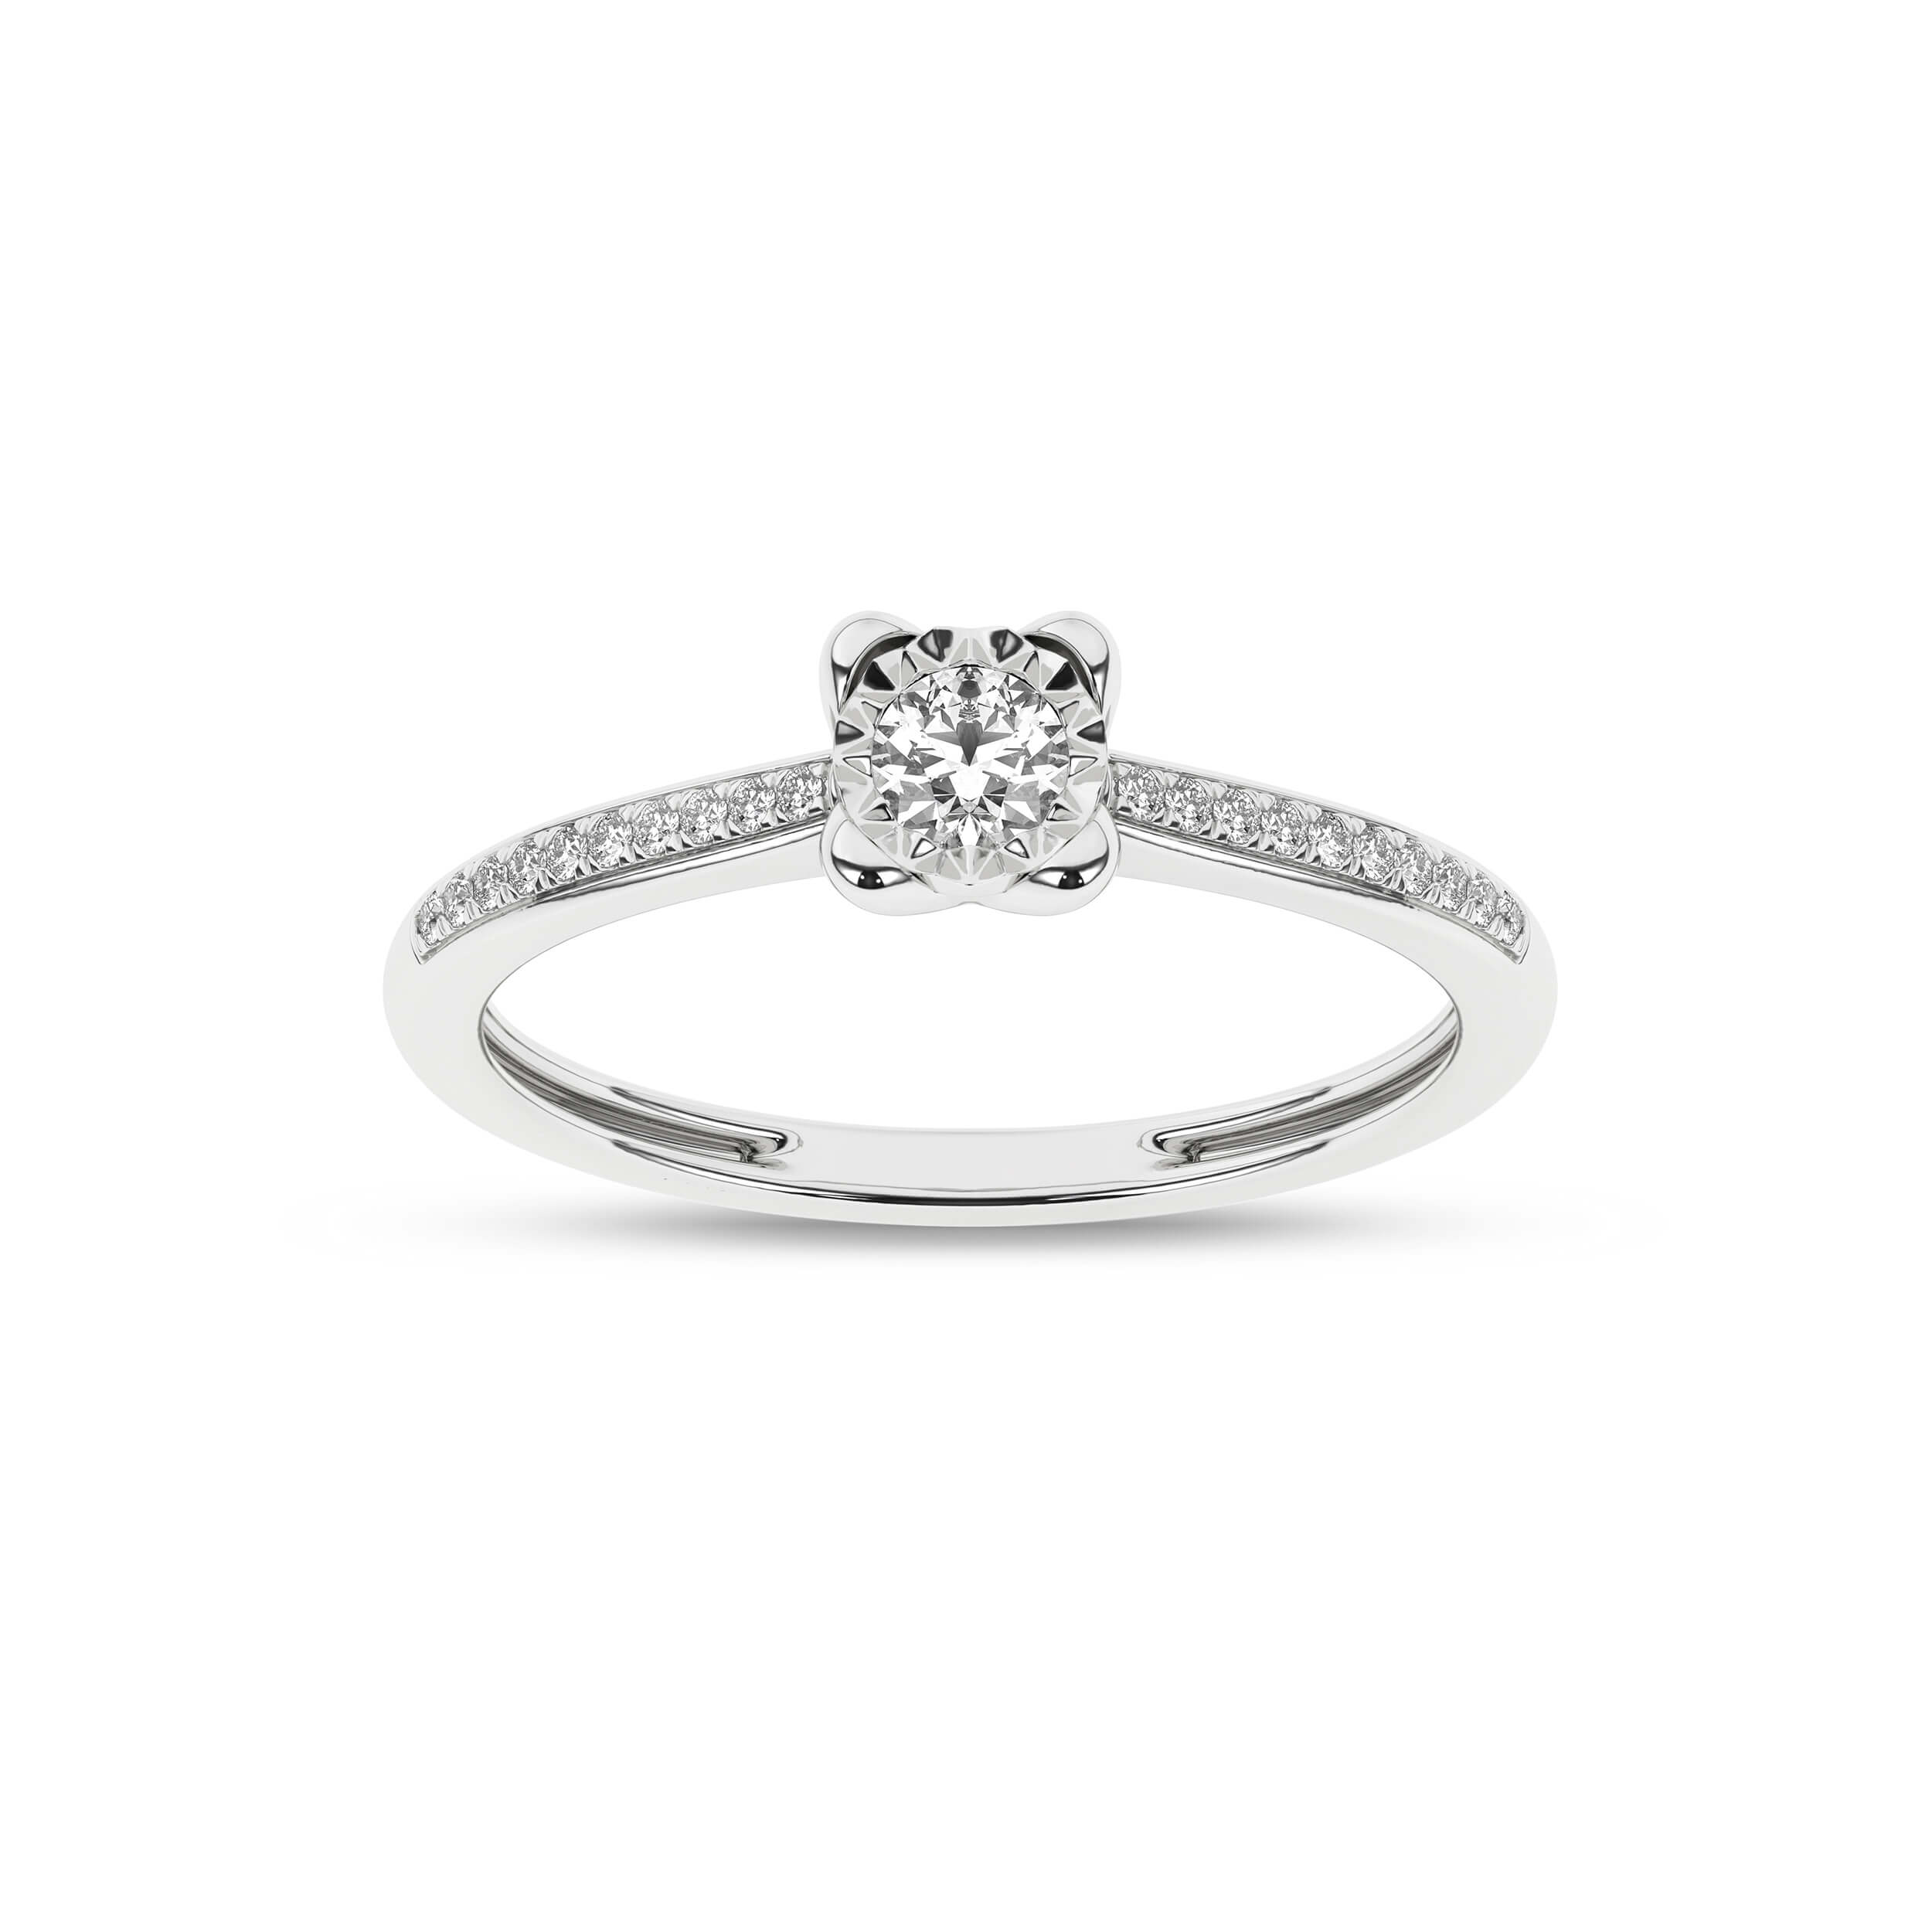 Inel de logodna din Aur Alb 14K cu Diamante 0.15Ct, articol RF11930, previzualizare foto 1